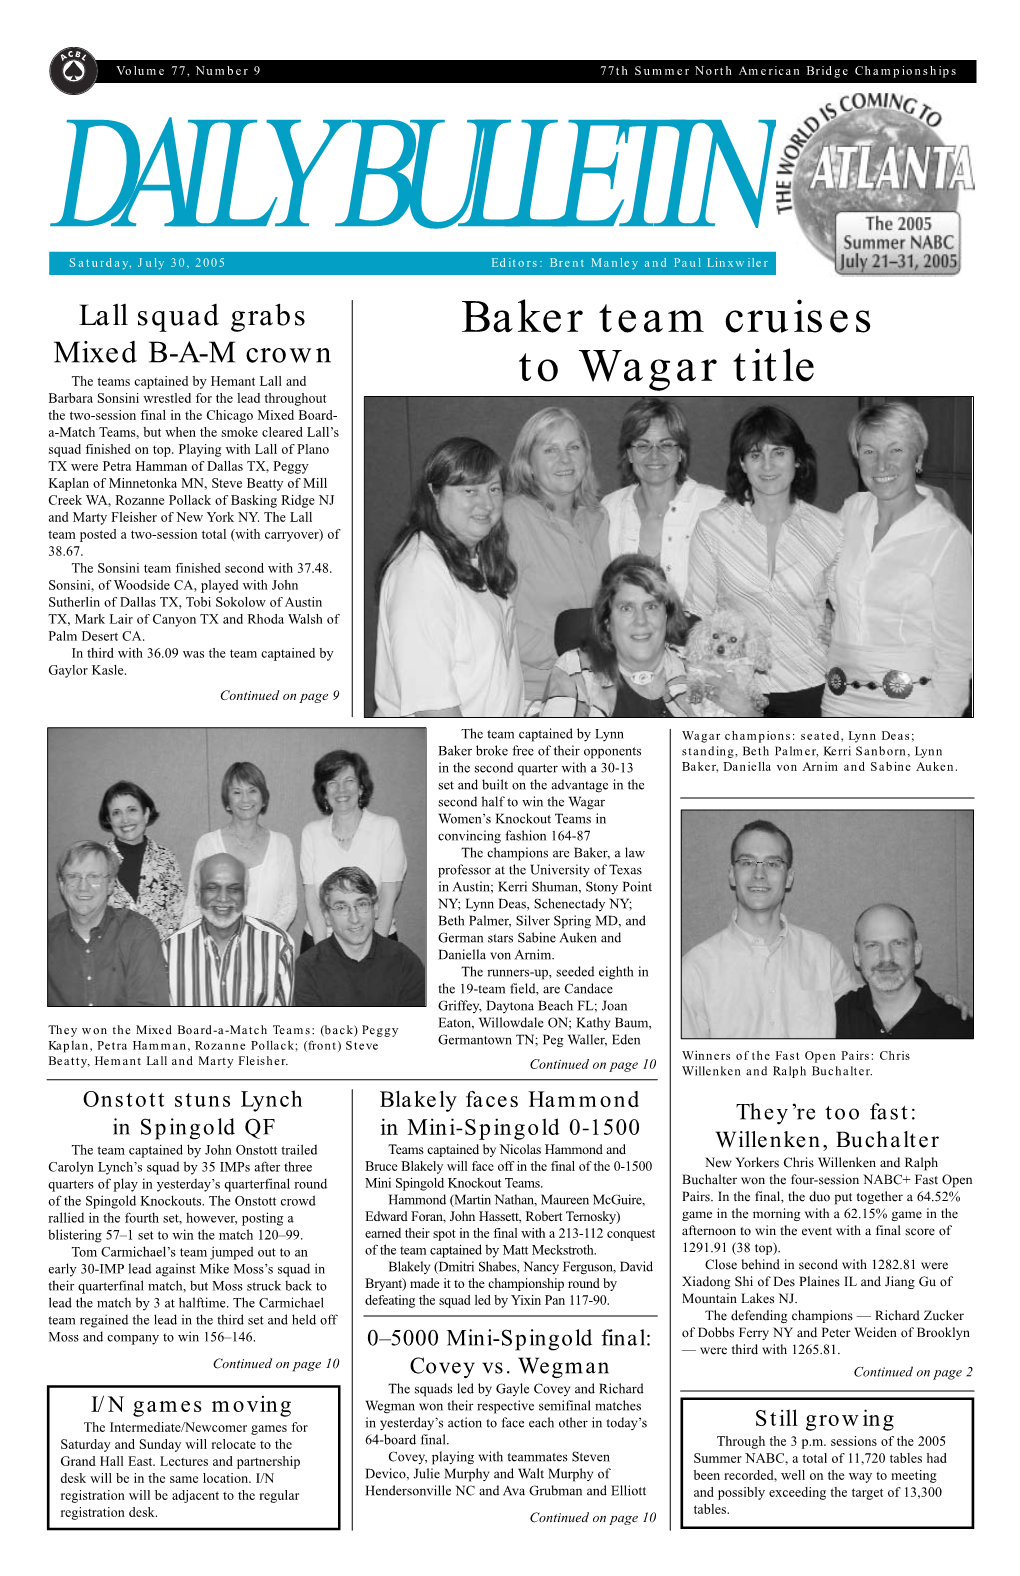 Baker Team Cruises to Wagar Title